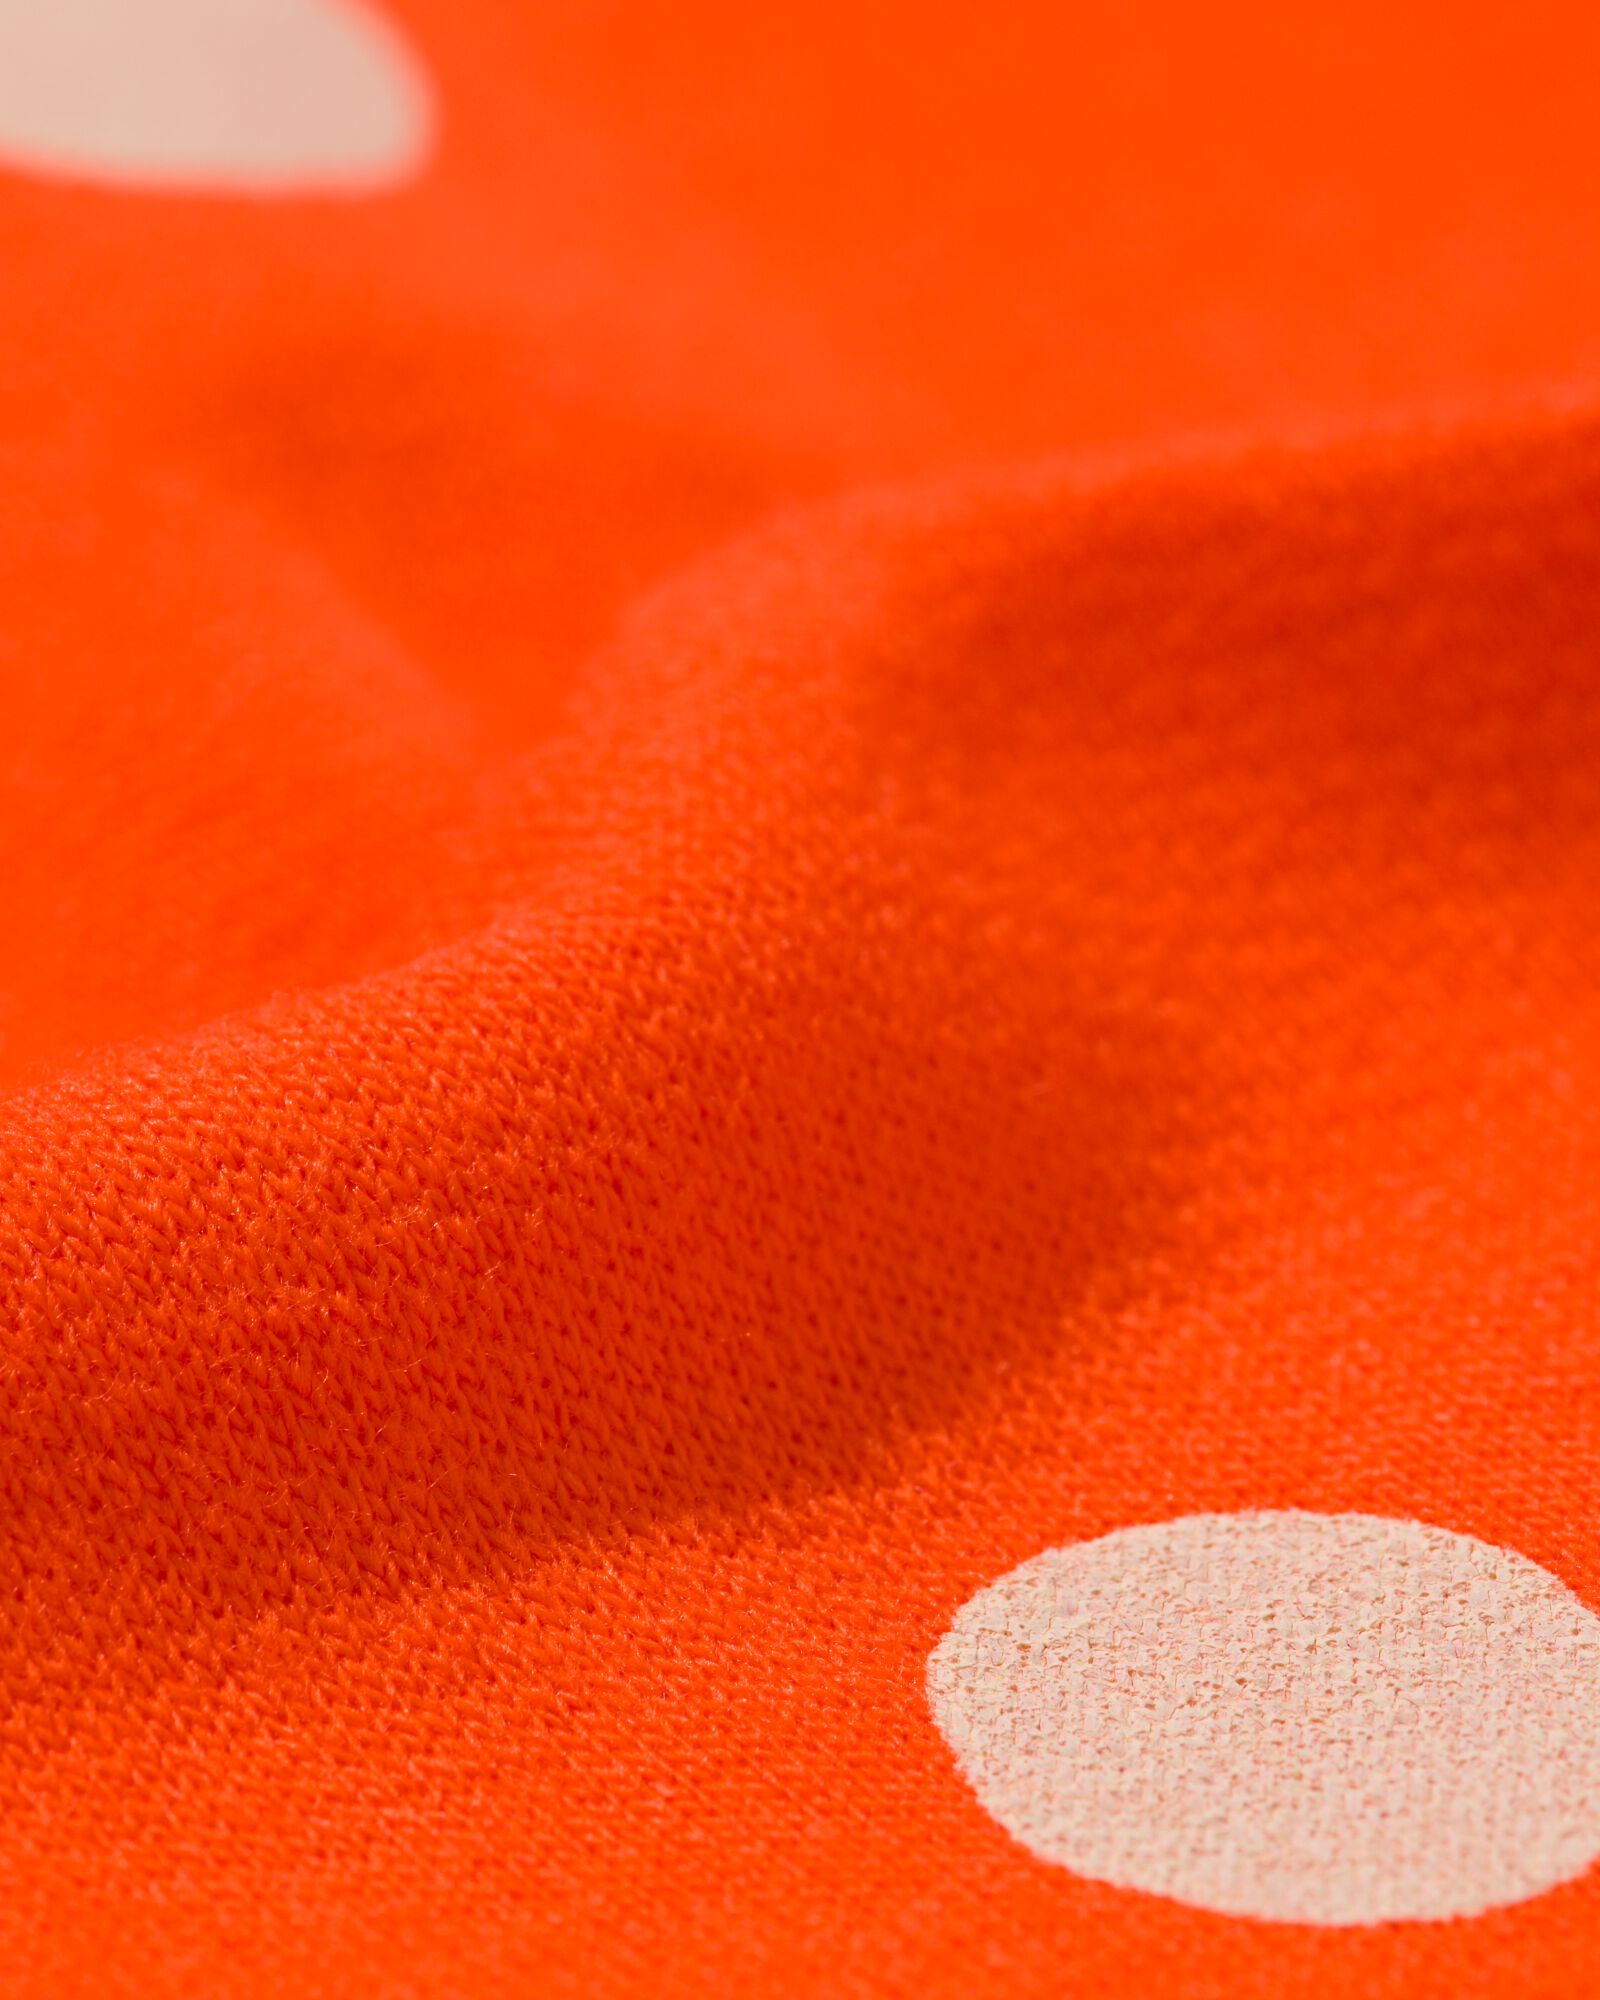 baby sweater stippen oranje 62 - 33002451 - HEMA